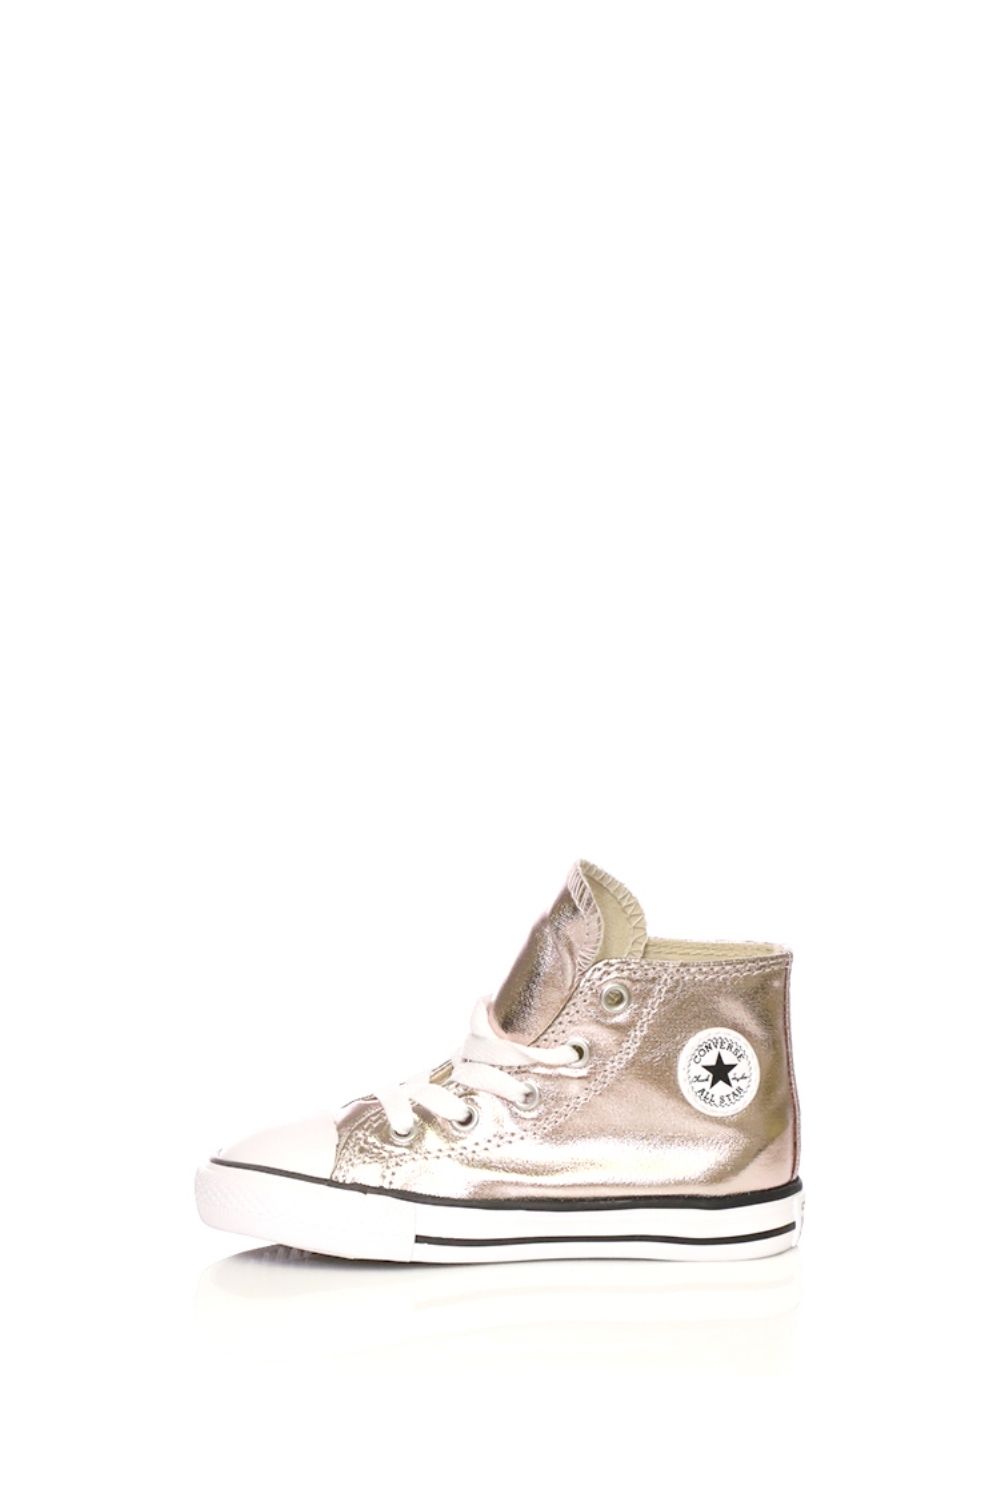 CONVERSE - Βρεφικά παπούτσια Converse Chuck Taylor All Star Hi ροζ μεταλλικό Παιδικά/Baby/Παπούτσια/Sneakers